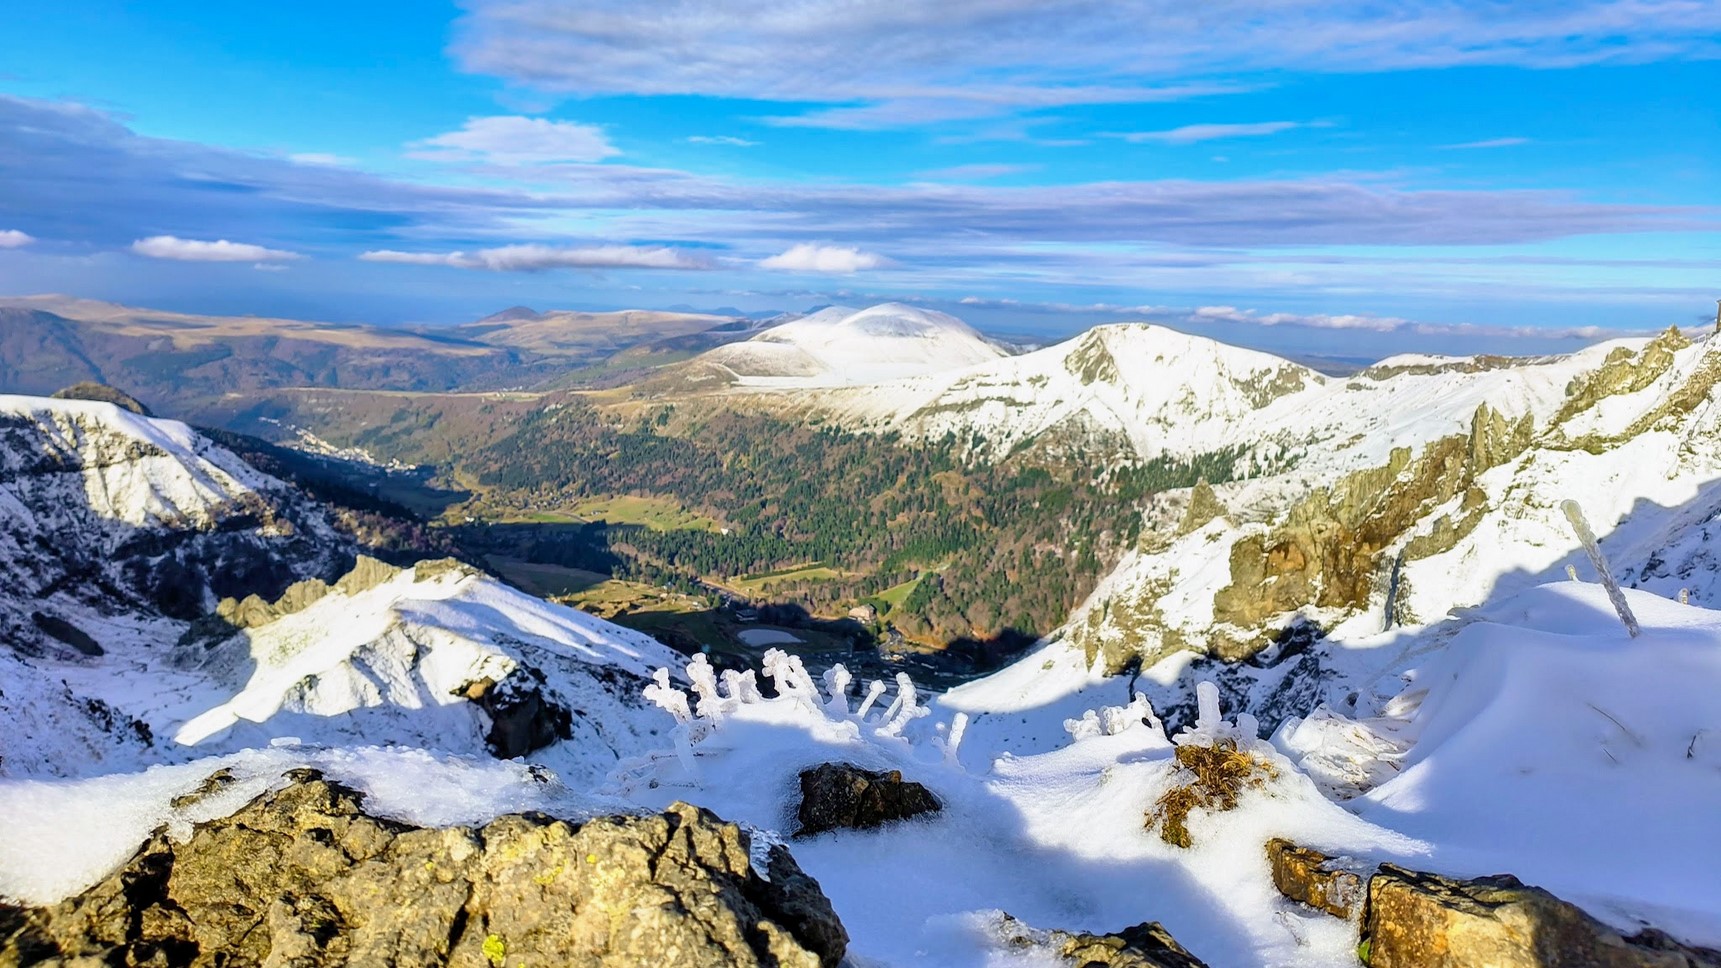 Massif du Sancy, the ridge path under the snow in November 2022